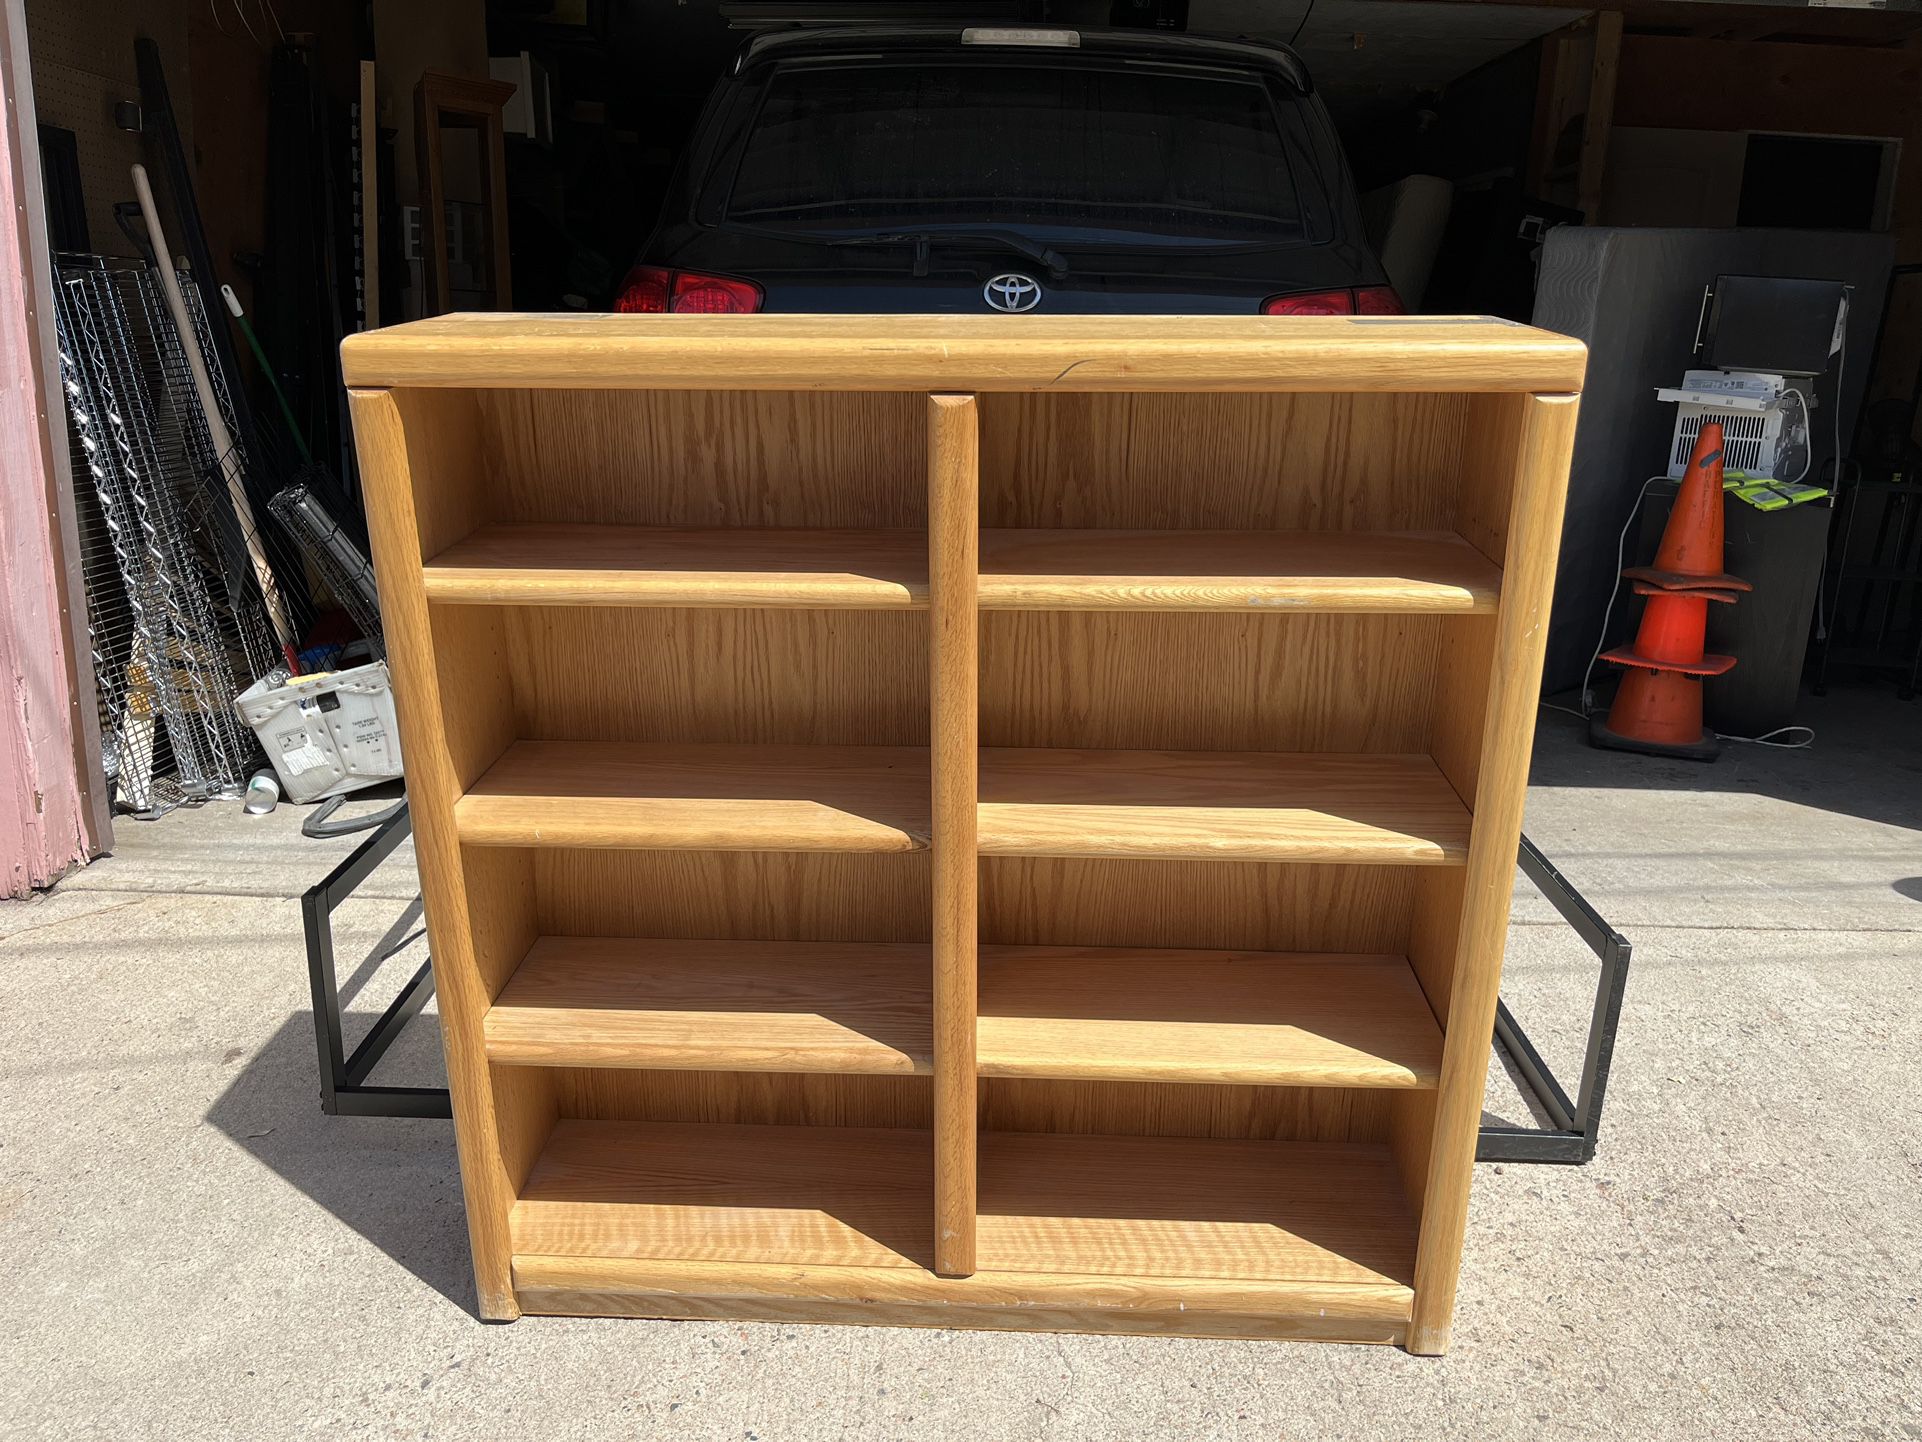 Solid wood Shelf organizer- 48”L x 12”W x 48”H